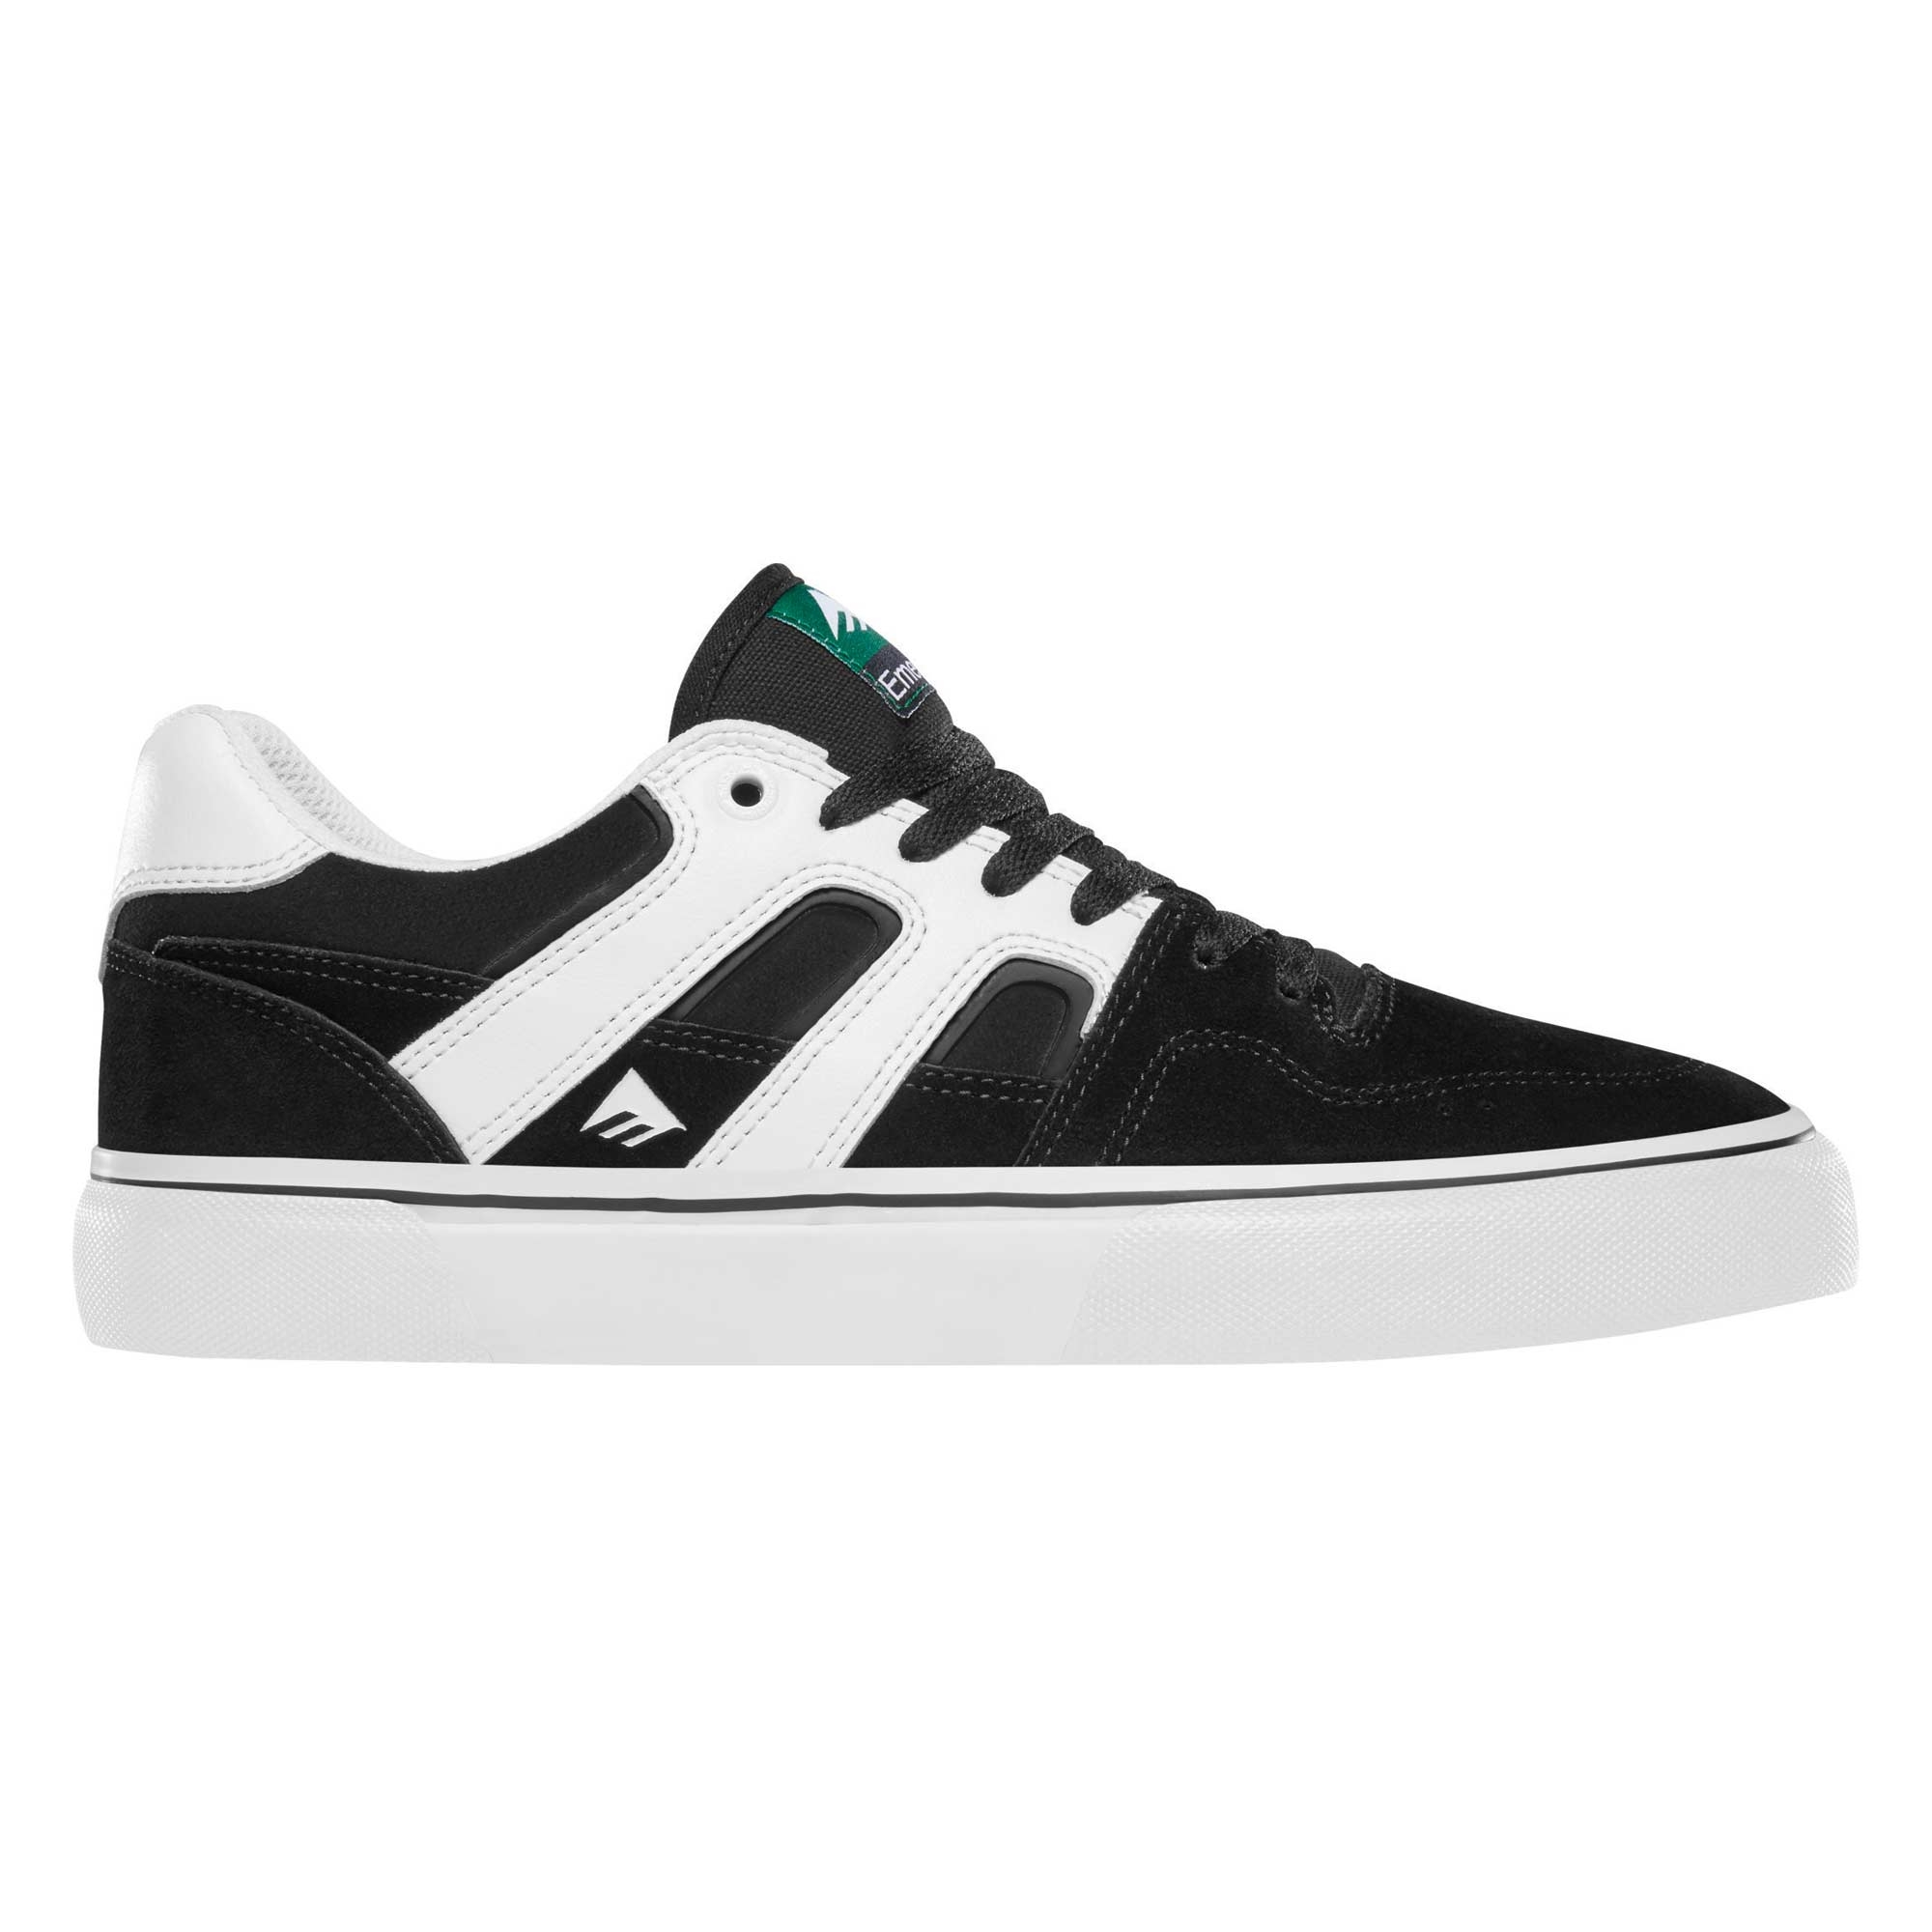 EMERICA Shoe TILT G6 VULC bla/whi black/white